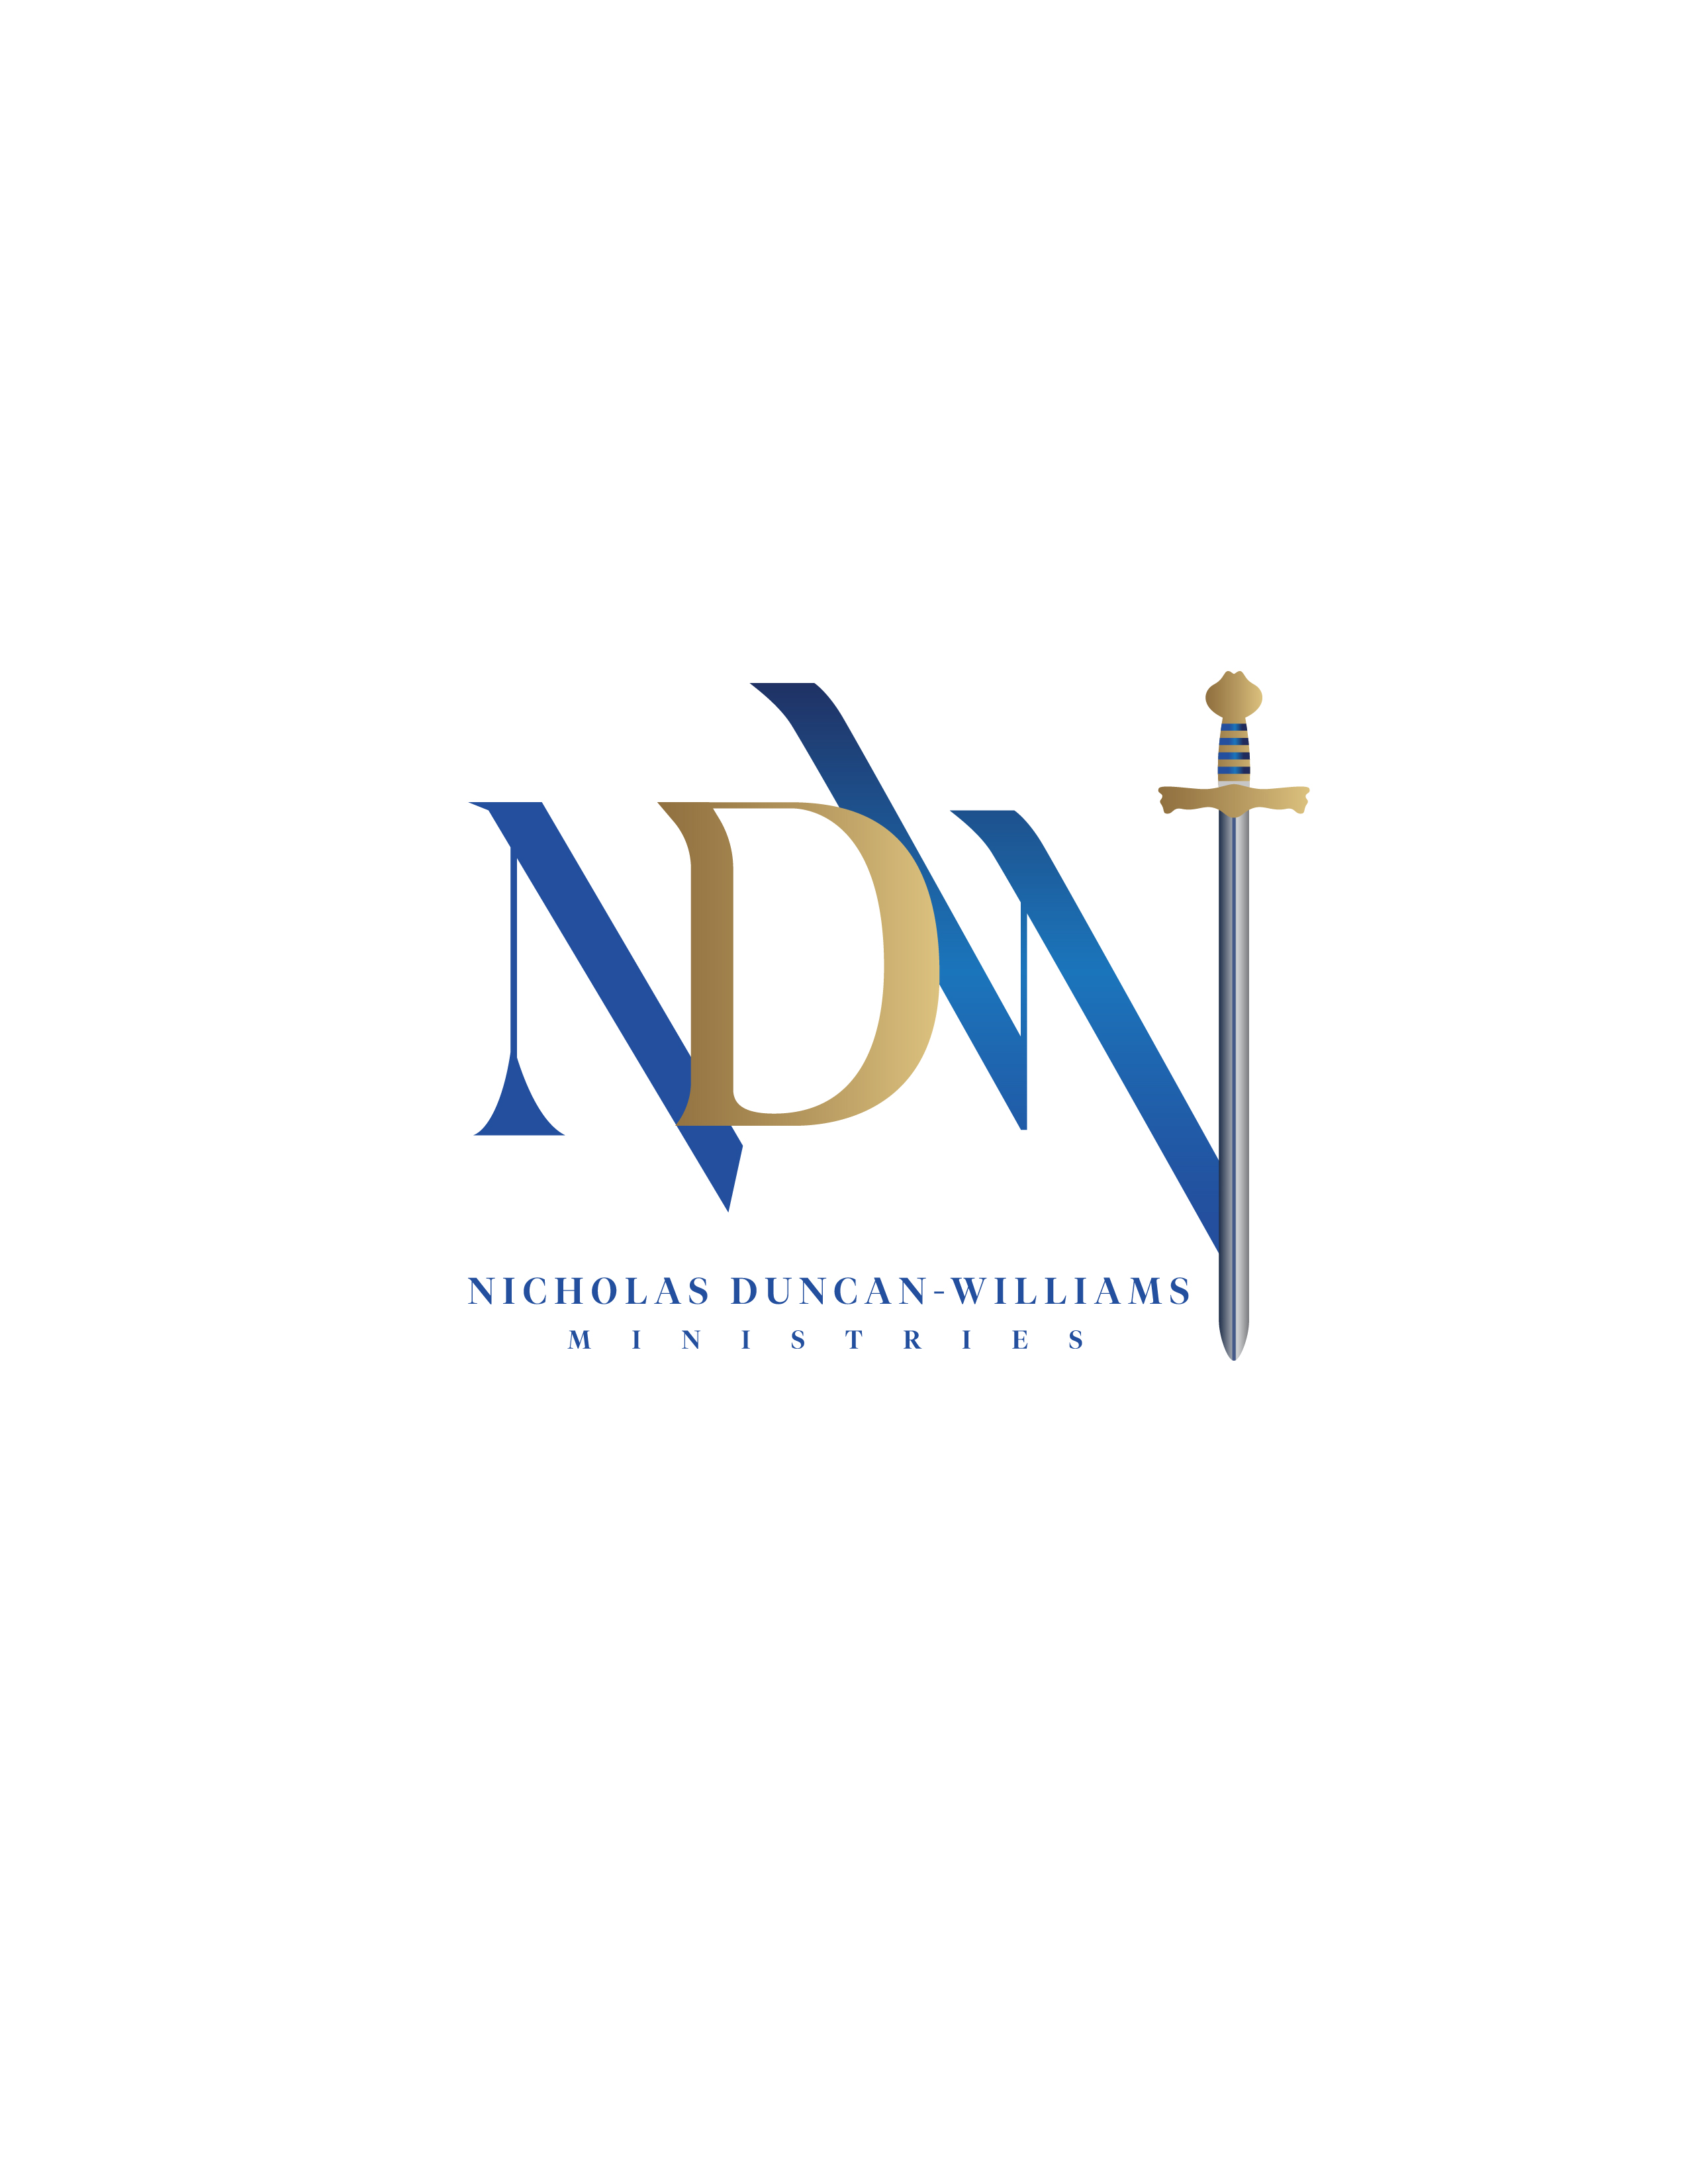 NDW Ministries logo